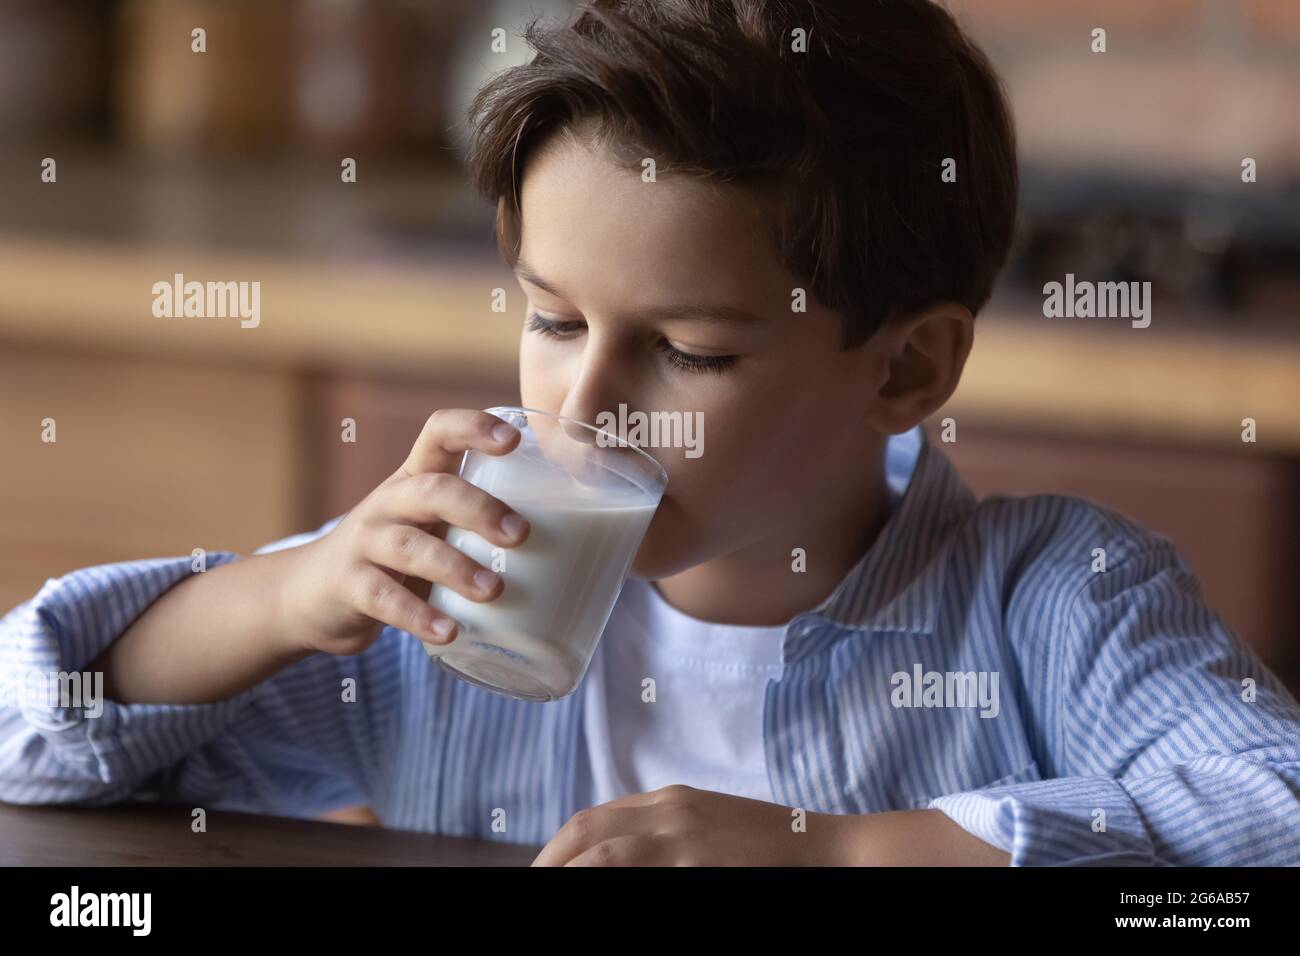 Preschooler boy drinking milk from glass during breakfast in kitchen Stock Photo